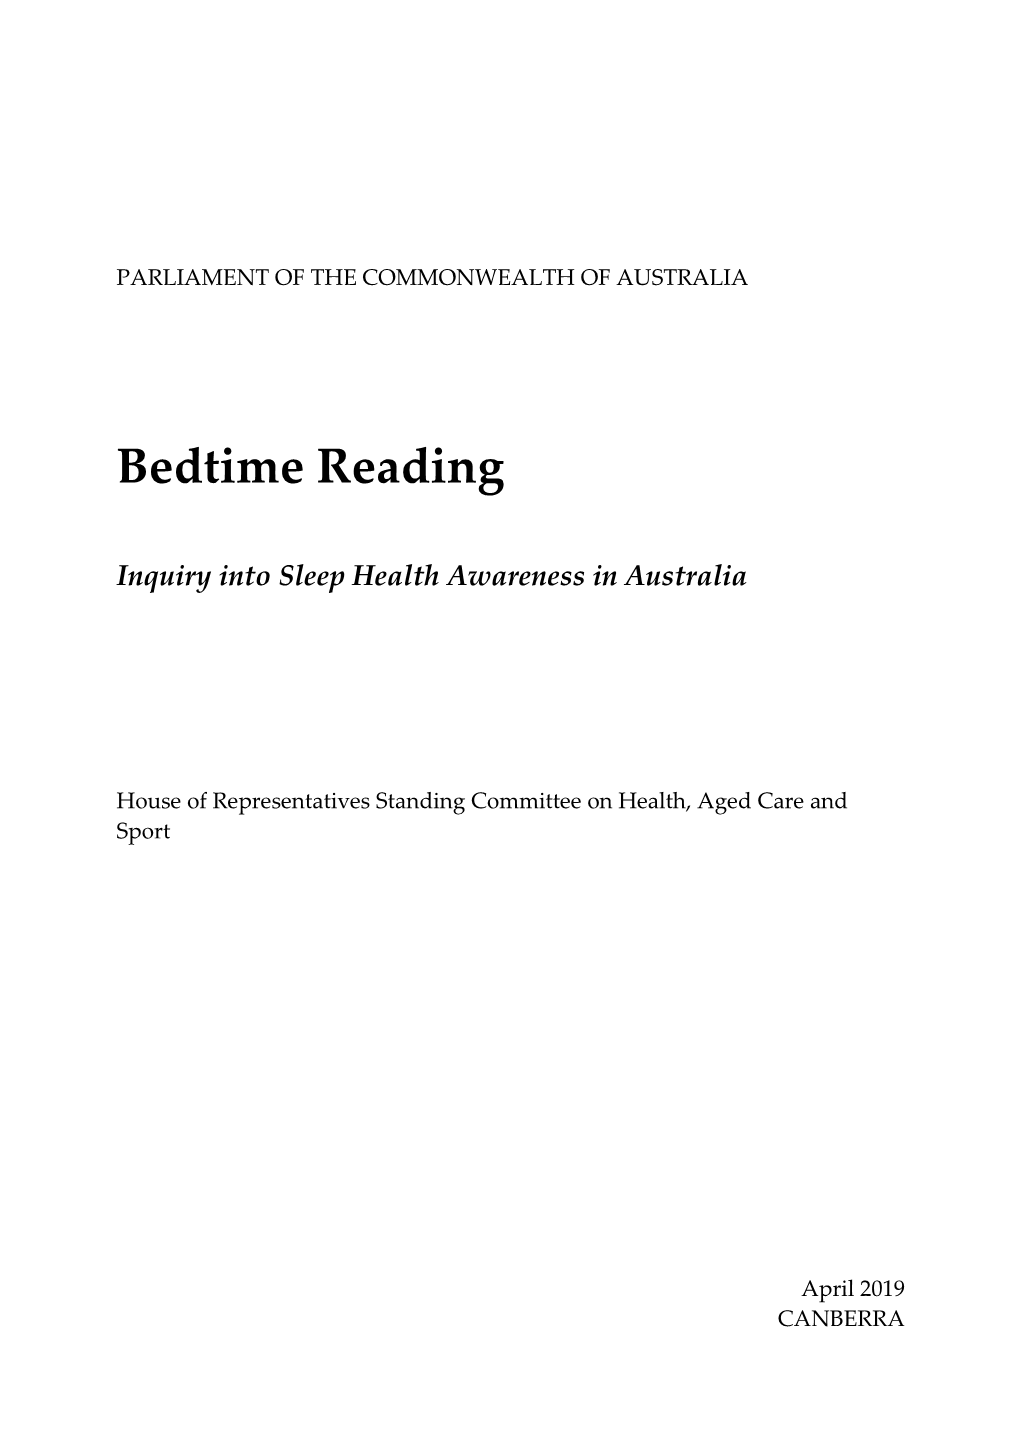 Bedtime Reading: Inquiry Into Sleep Health Awareness in Australia